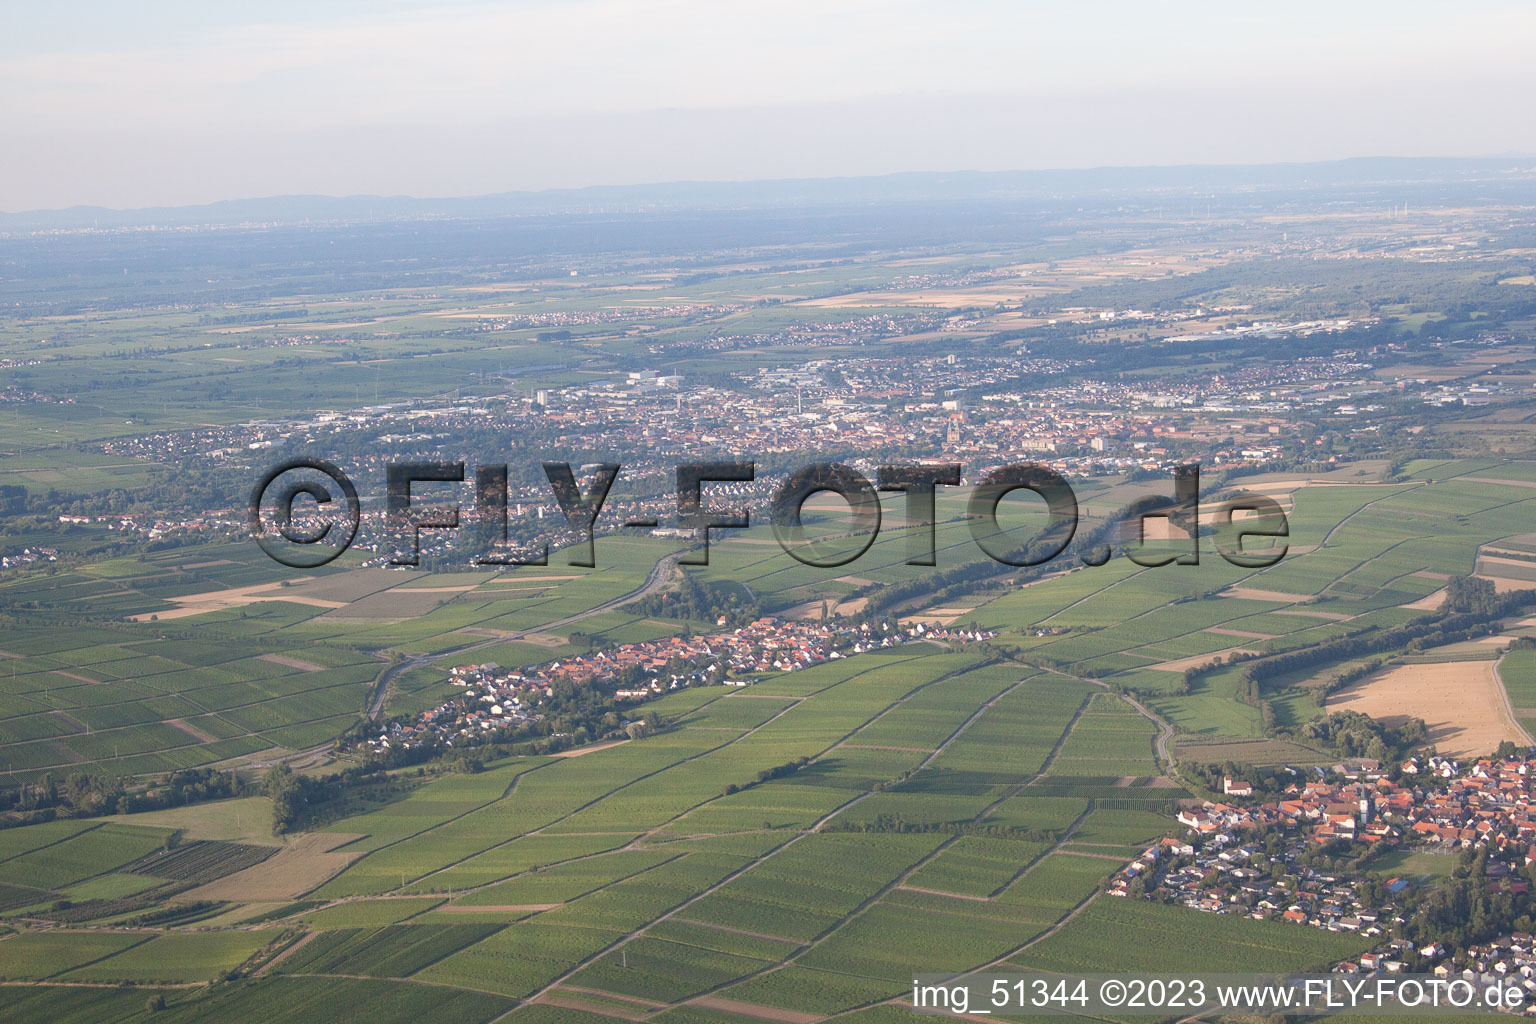 District Arzheim in Landau in der Pfalz in the state Rhineland-Palatinate, Germany from the plane